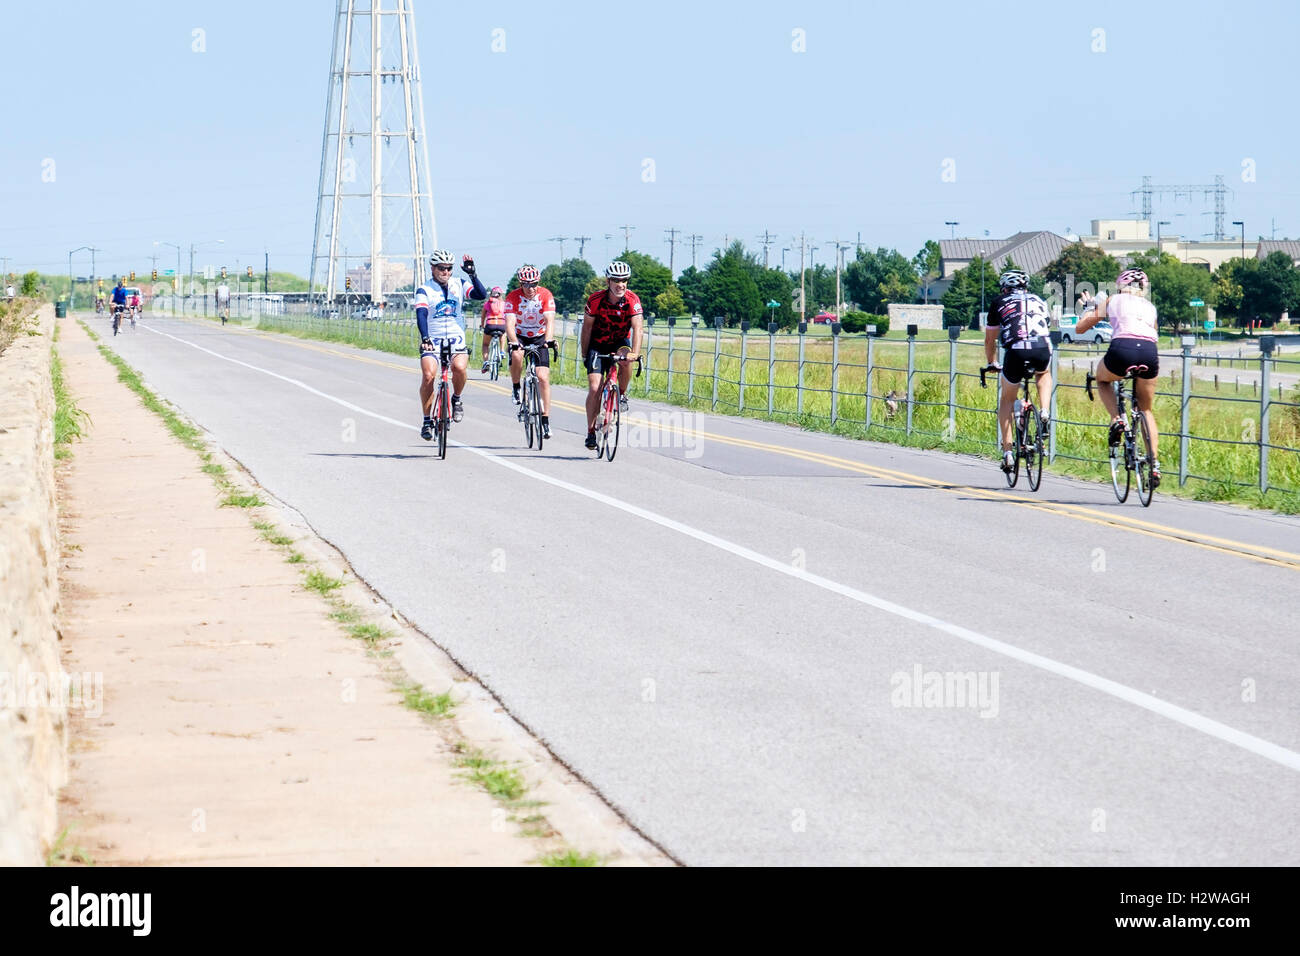 Many people enjoy cycling on the trails of Hefner Lake in Oklahoma City, Oklahoma, USA. Stock Photo